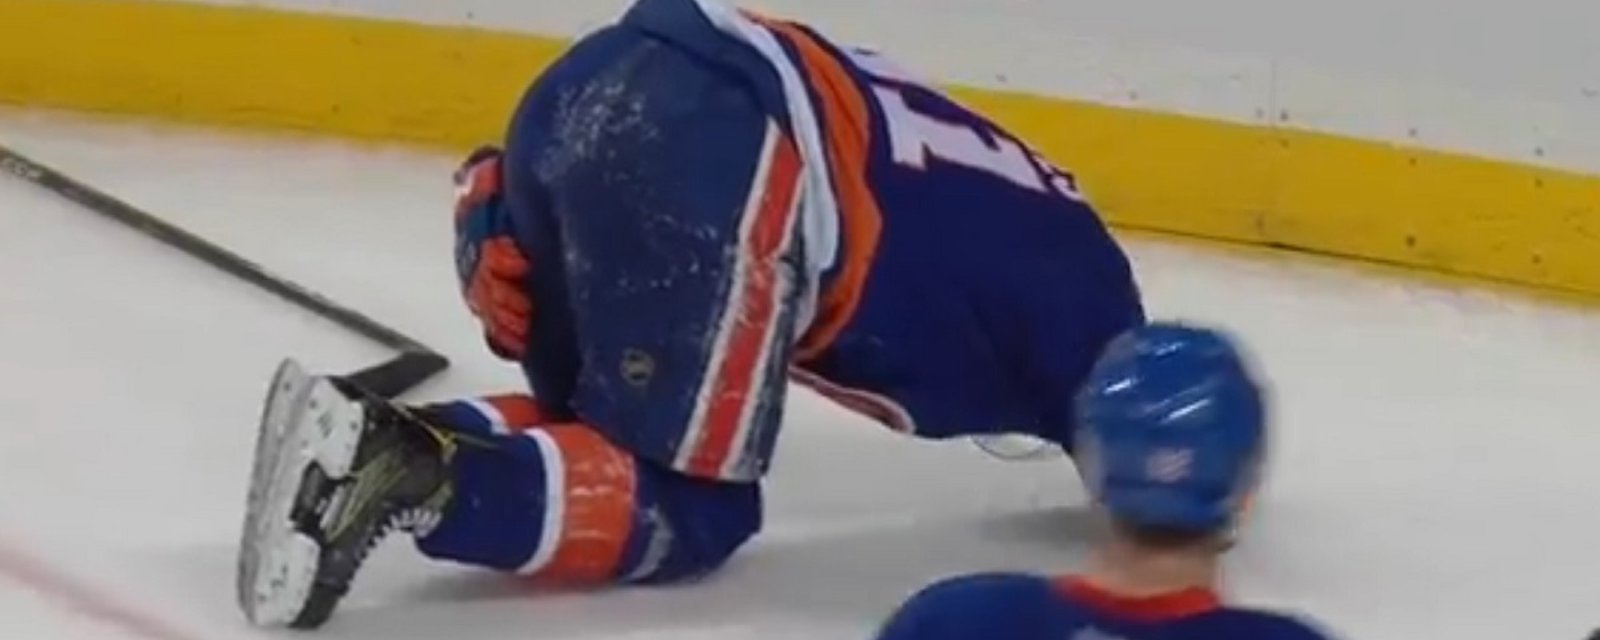 Breaking: Islanders captain John Tavares appears badly injured.